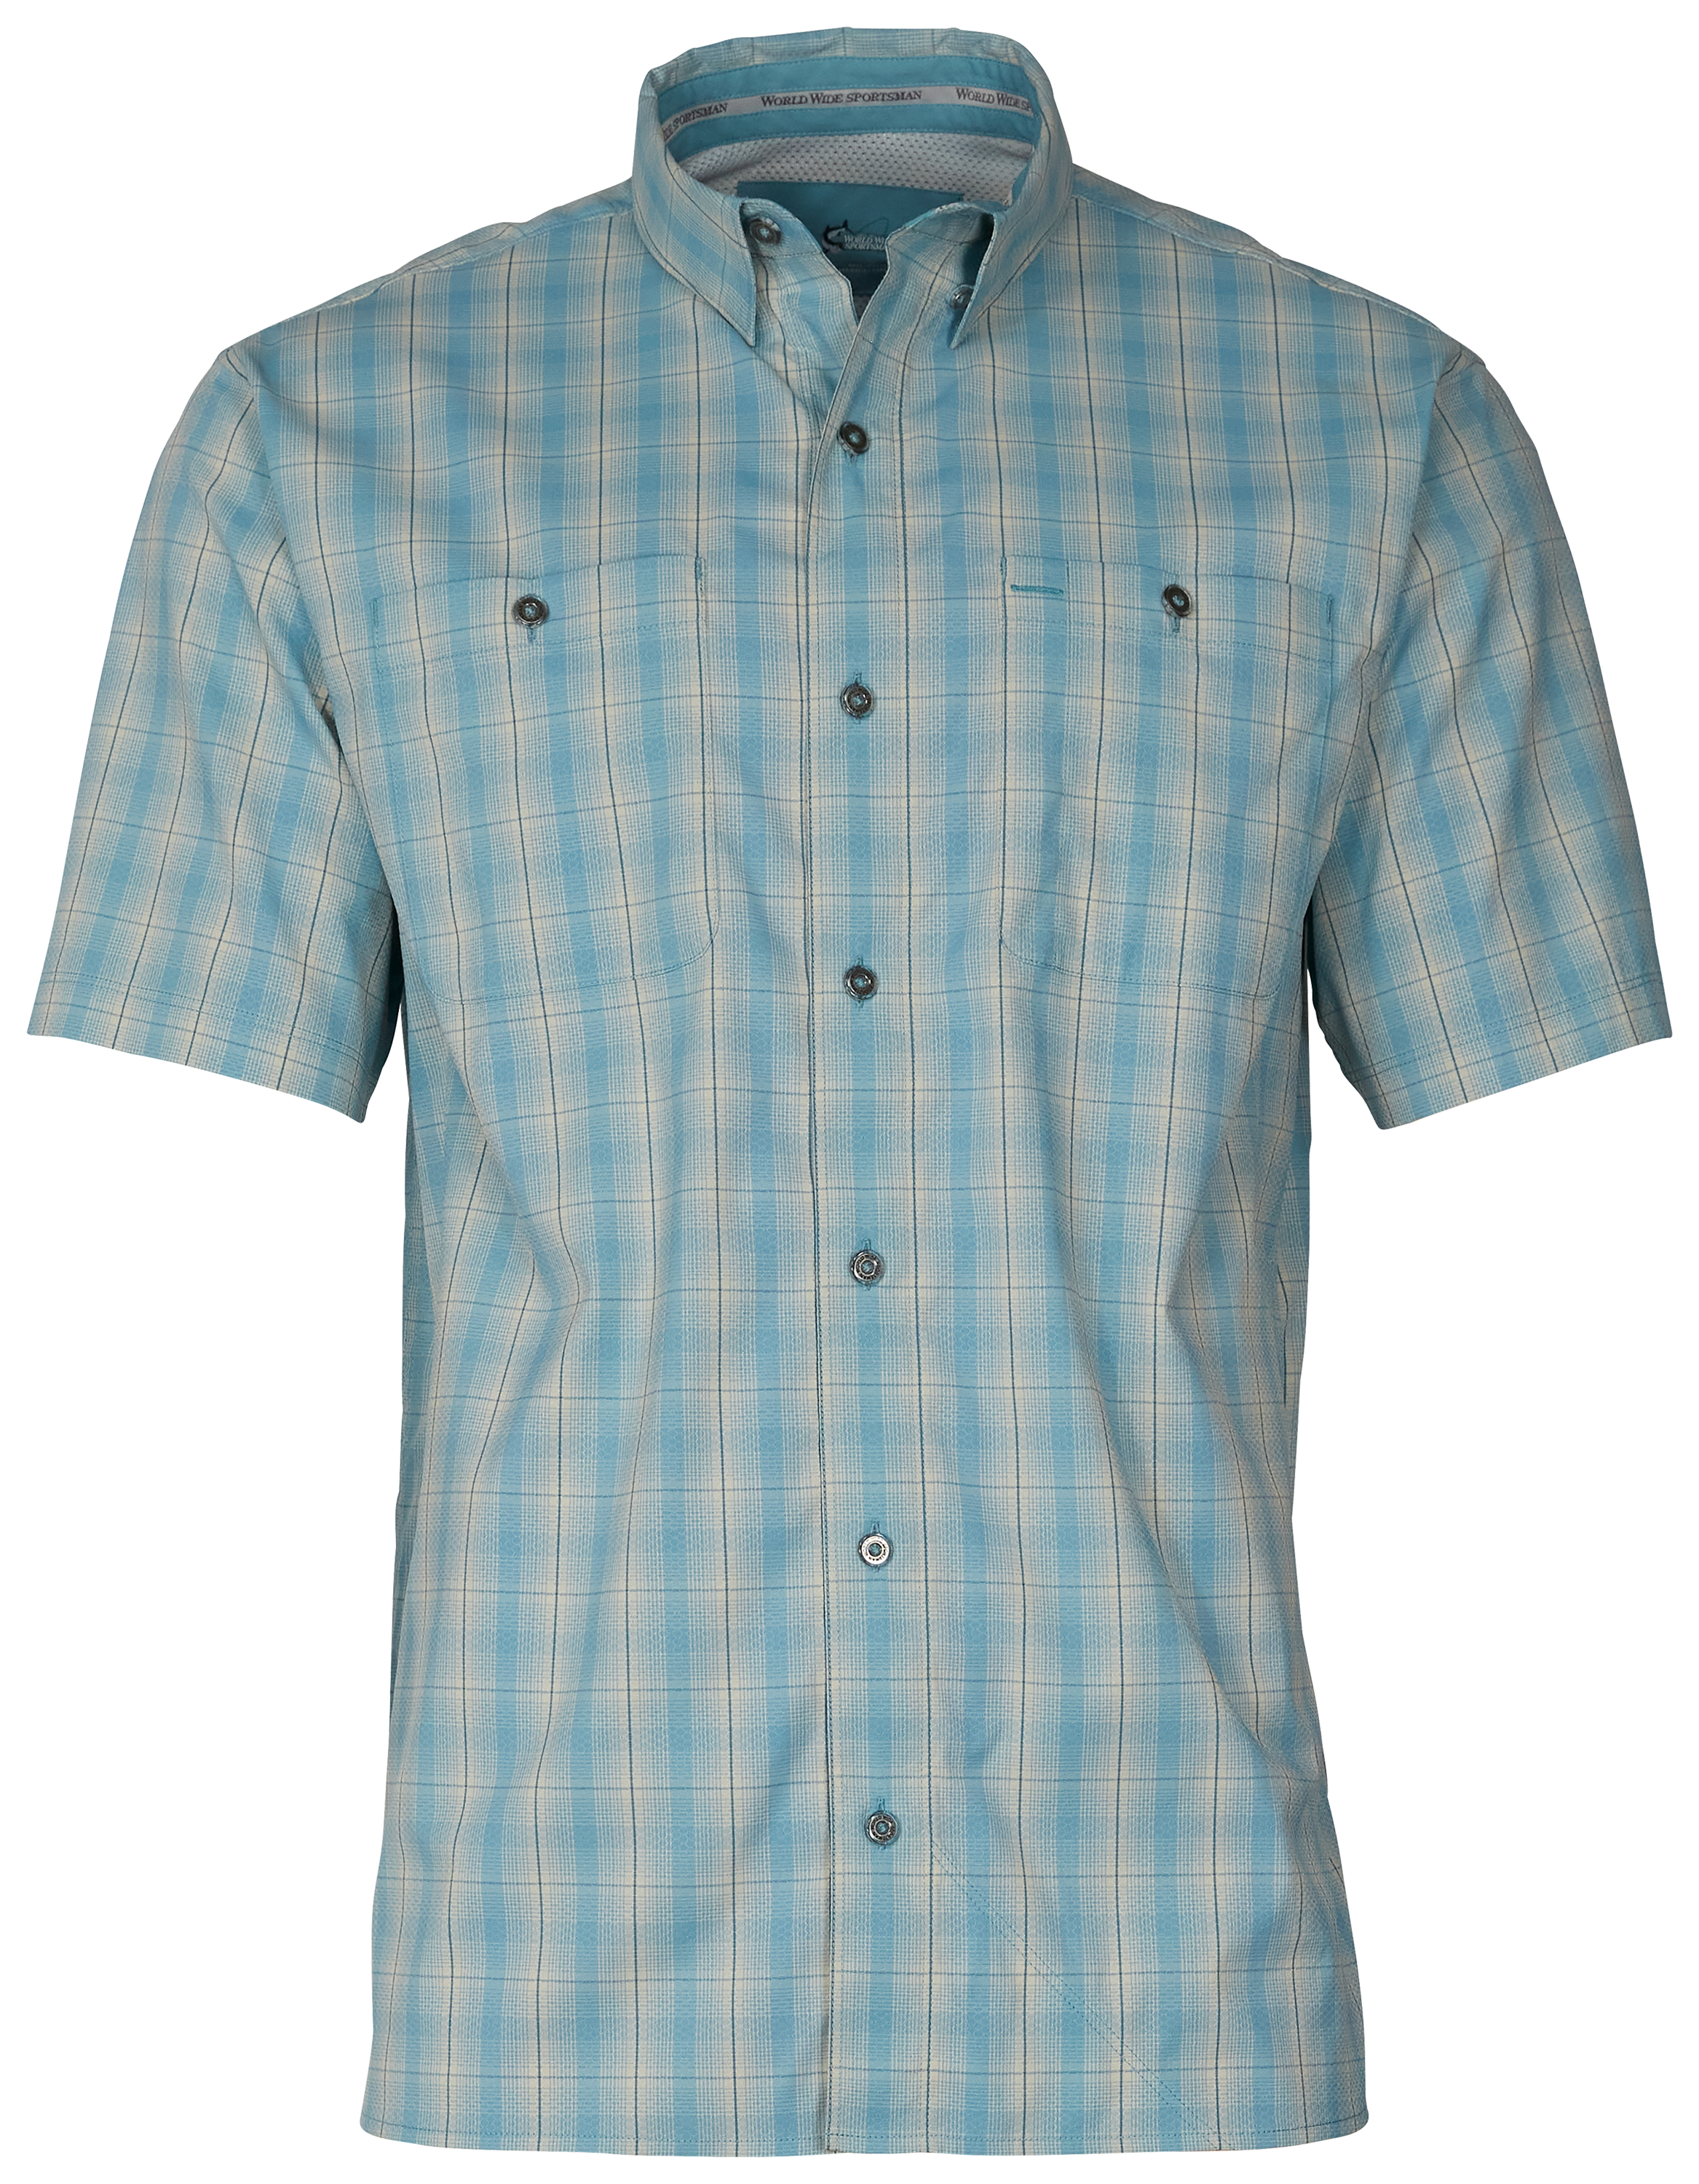 World Wide Sportsman Ultimate Angler Plaid Short-Sleeve Shirt for Men - Fading Ripple Plaid - 2XL